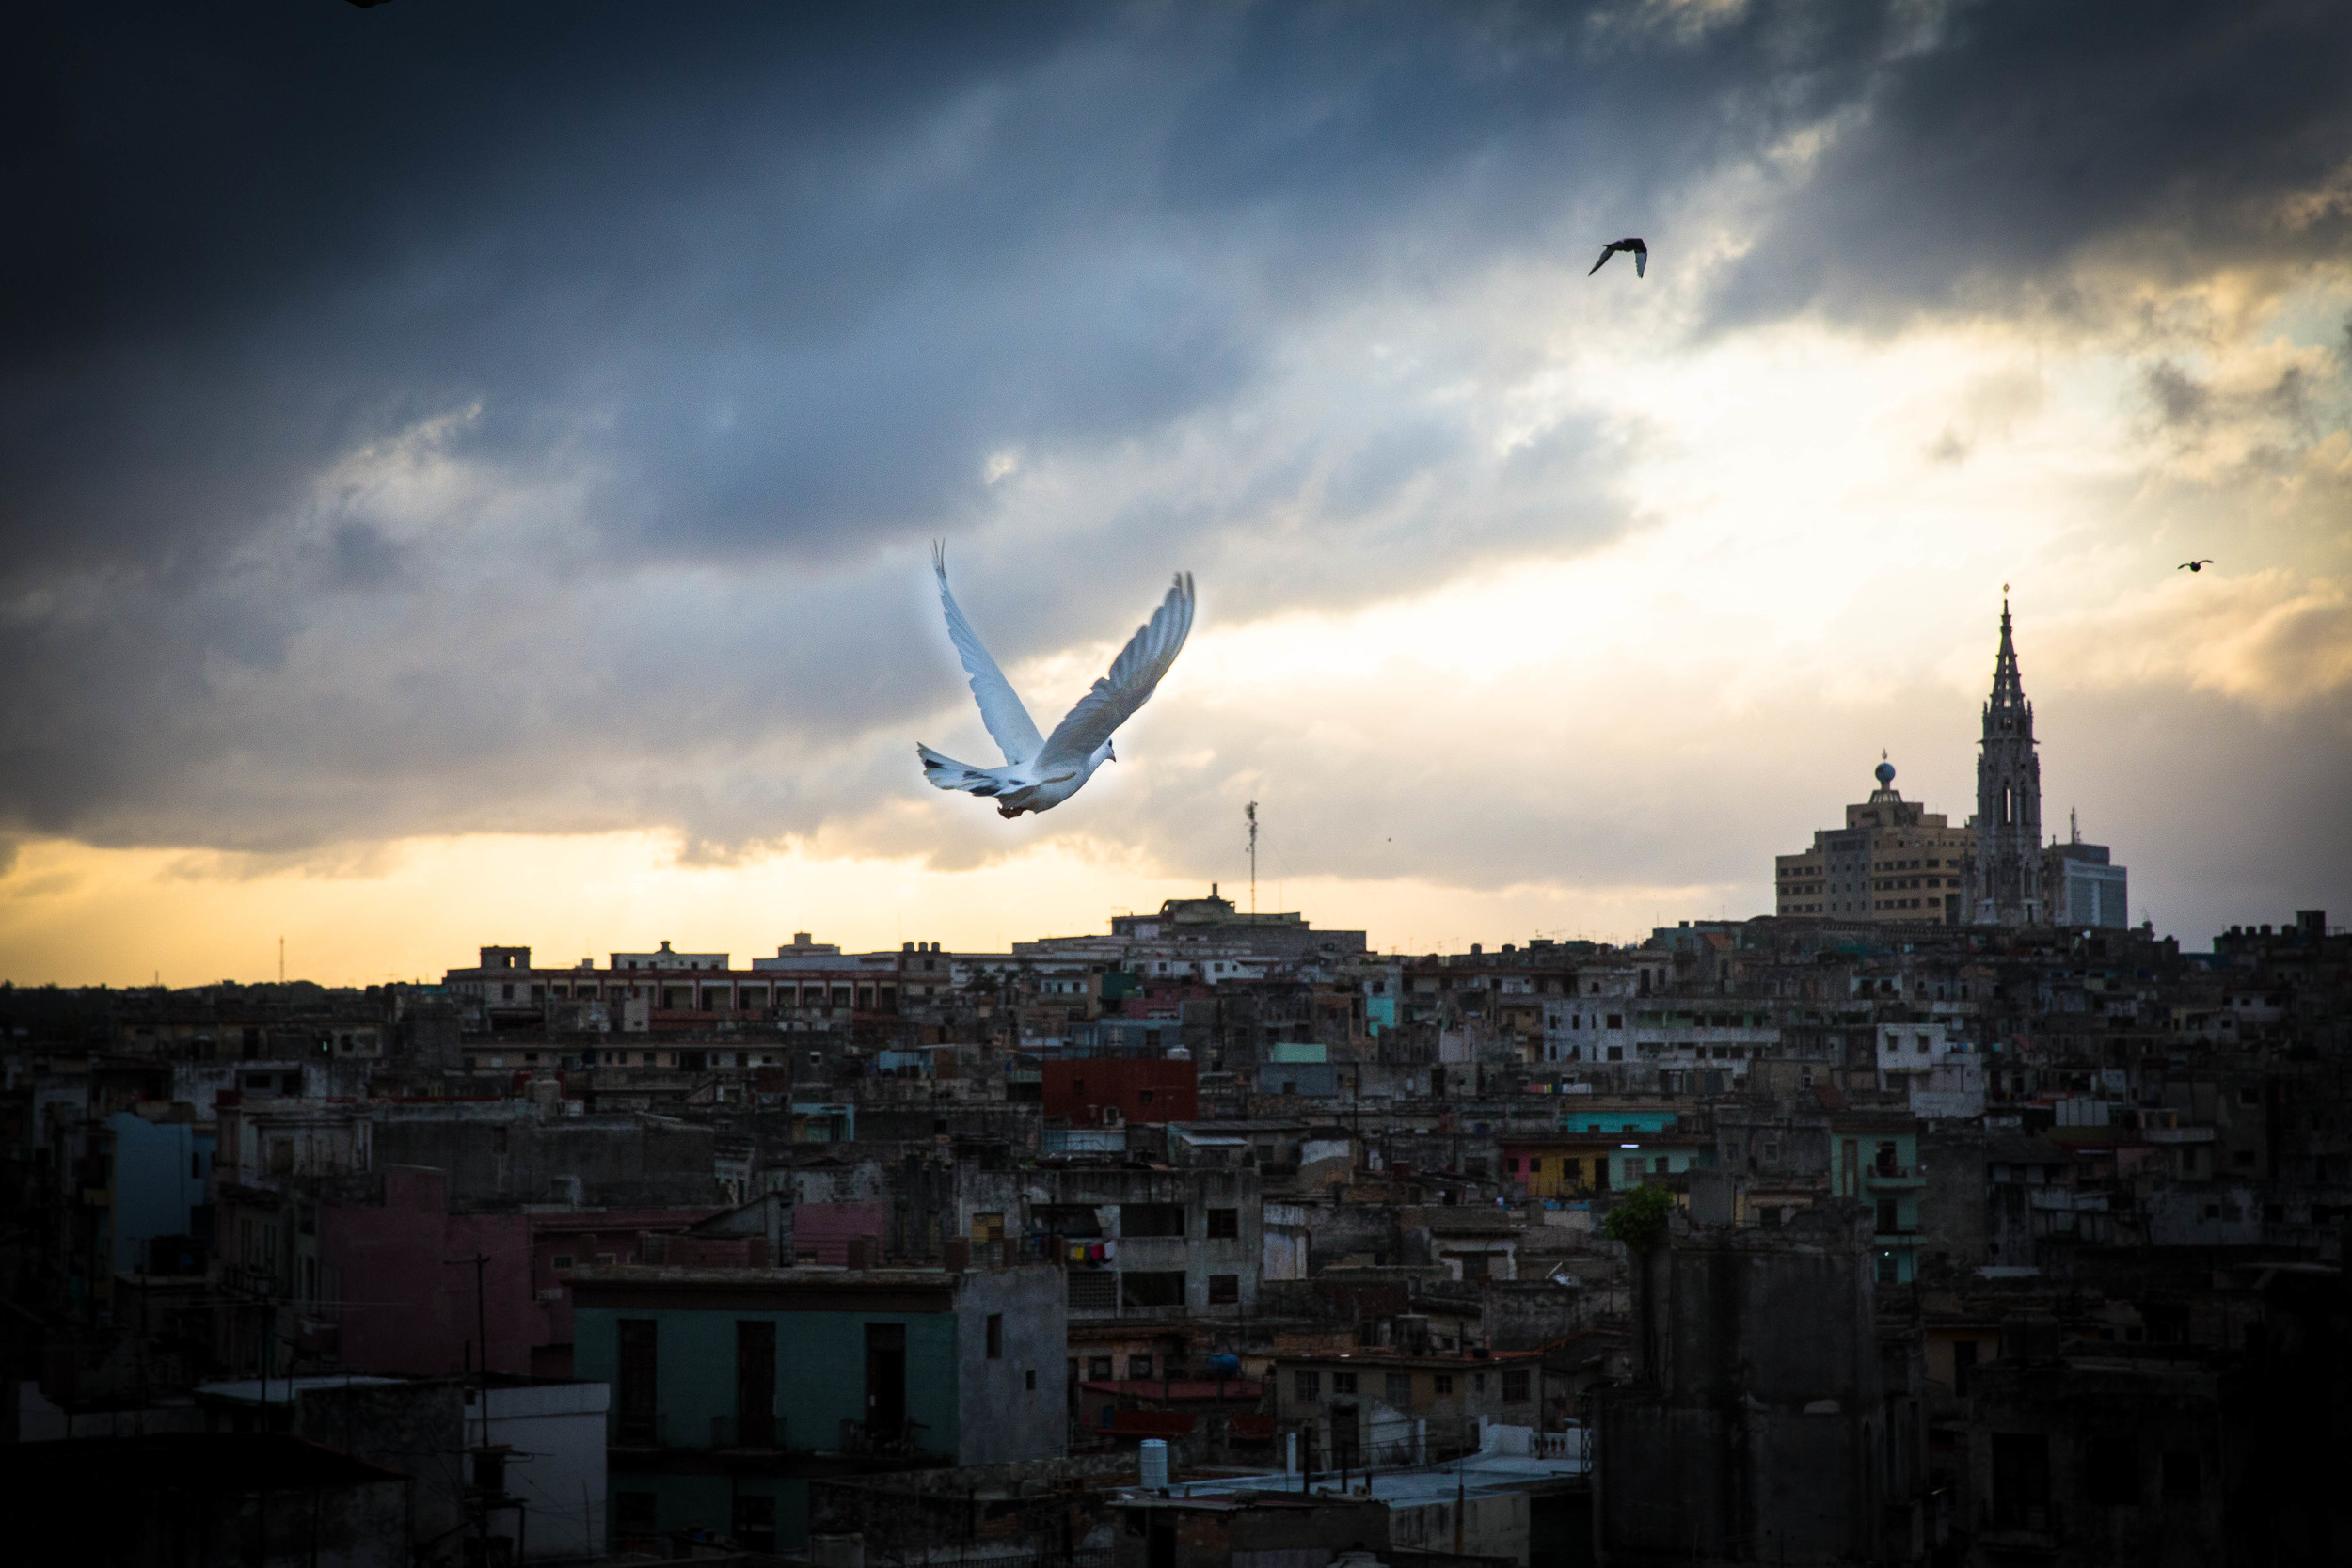 Manny_sunset & homing pigeons.jpg